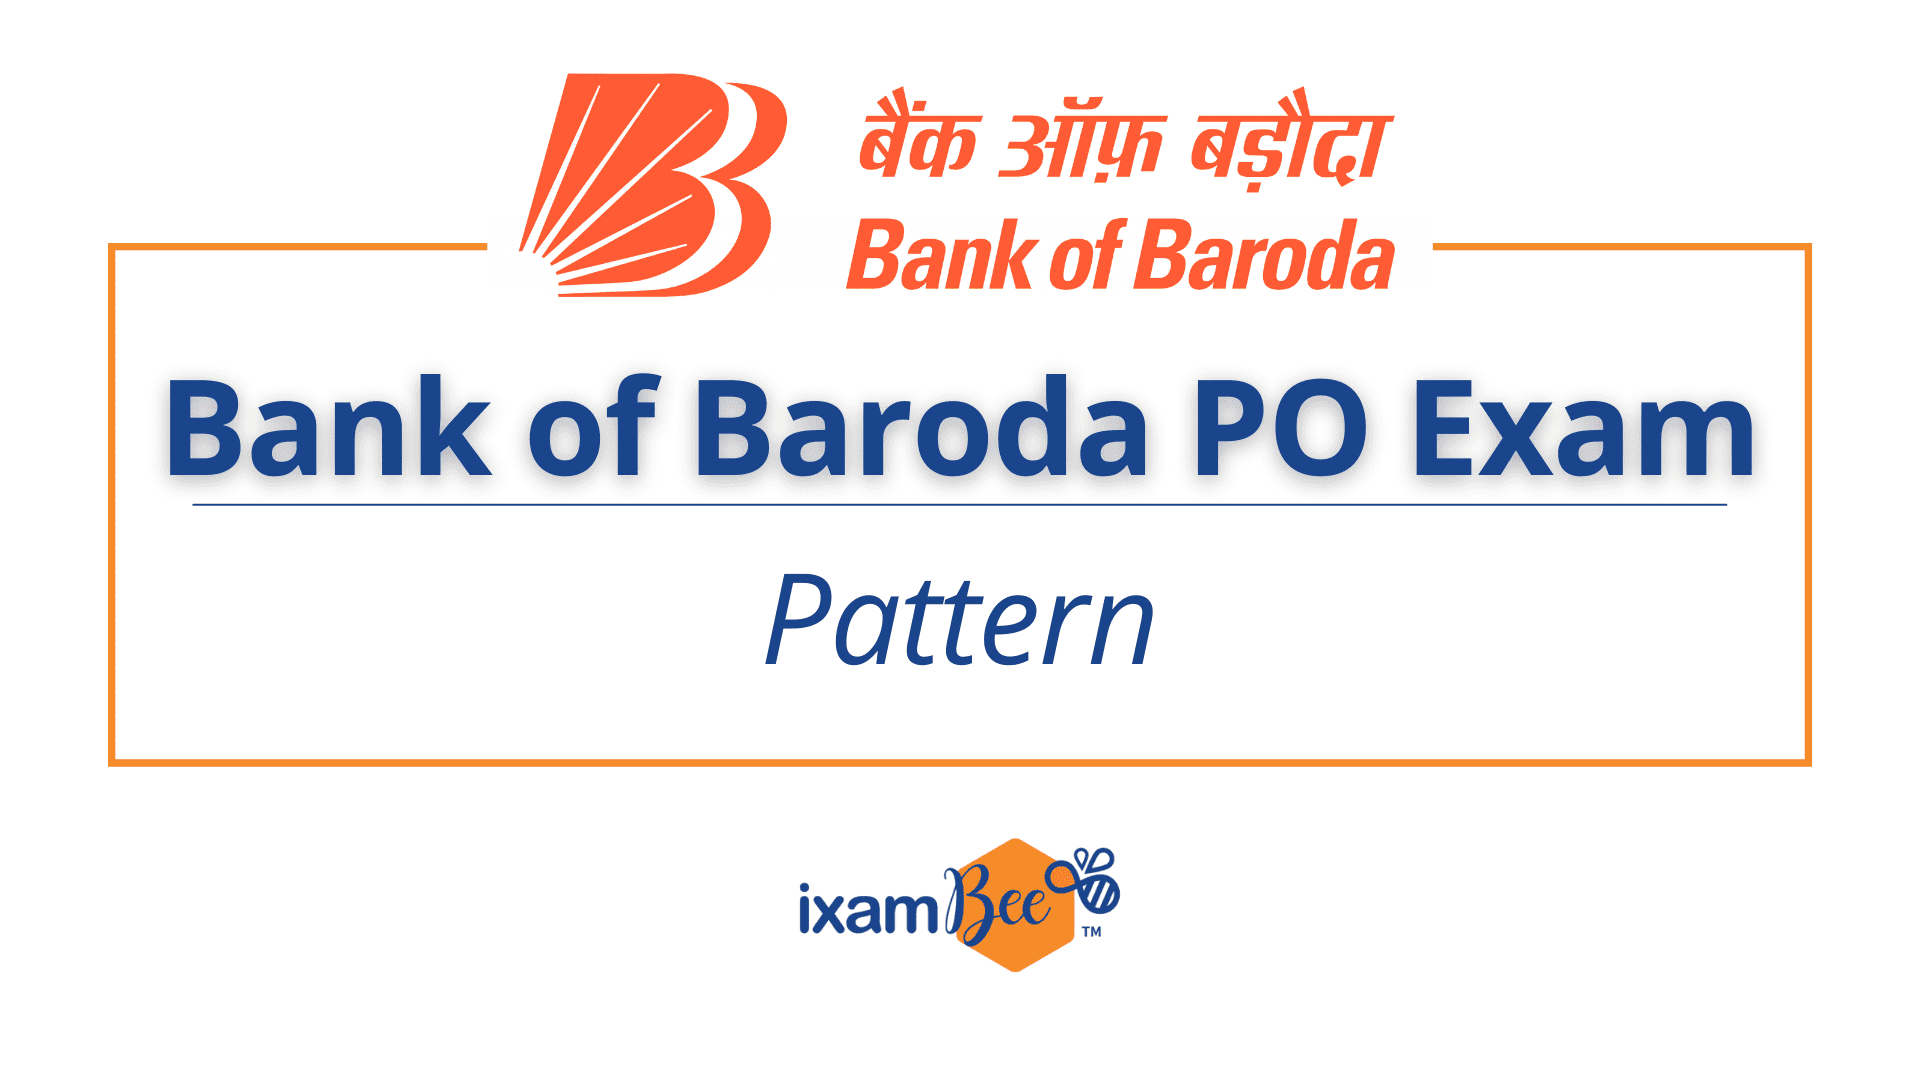 Bank of Baroda PO Exam Pattern